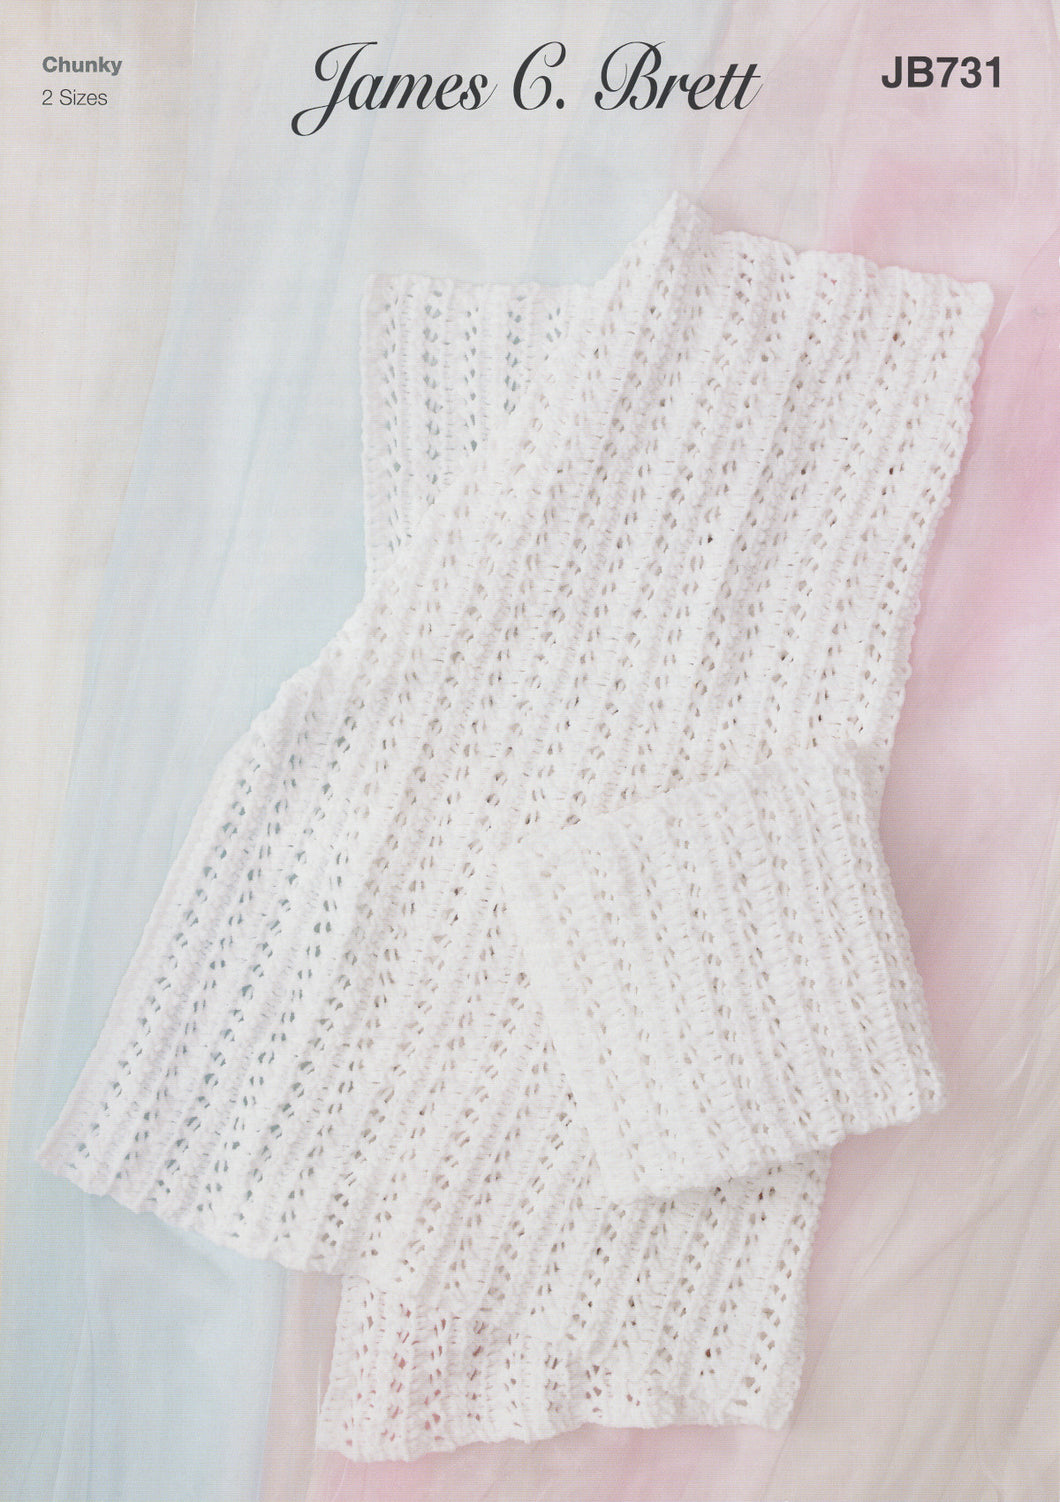 James Brett Chunky Knitting Pattern - Baby Blankets (JB731)